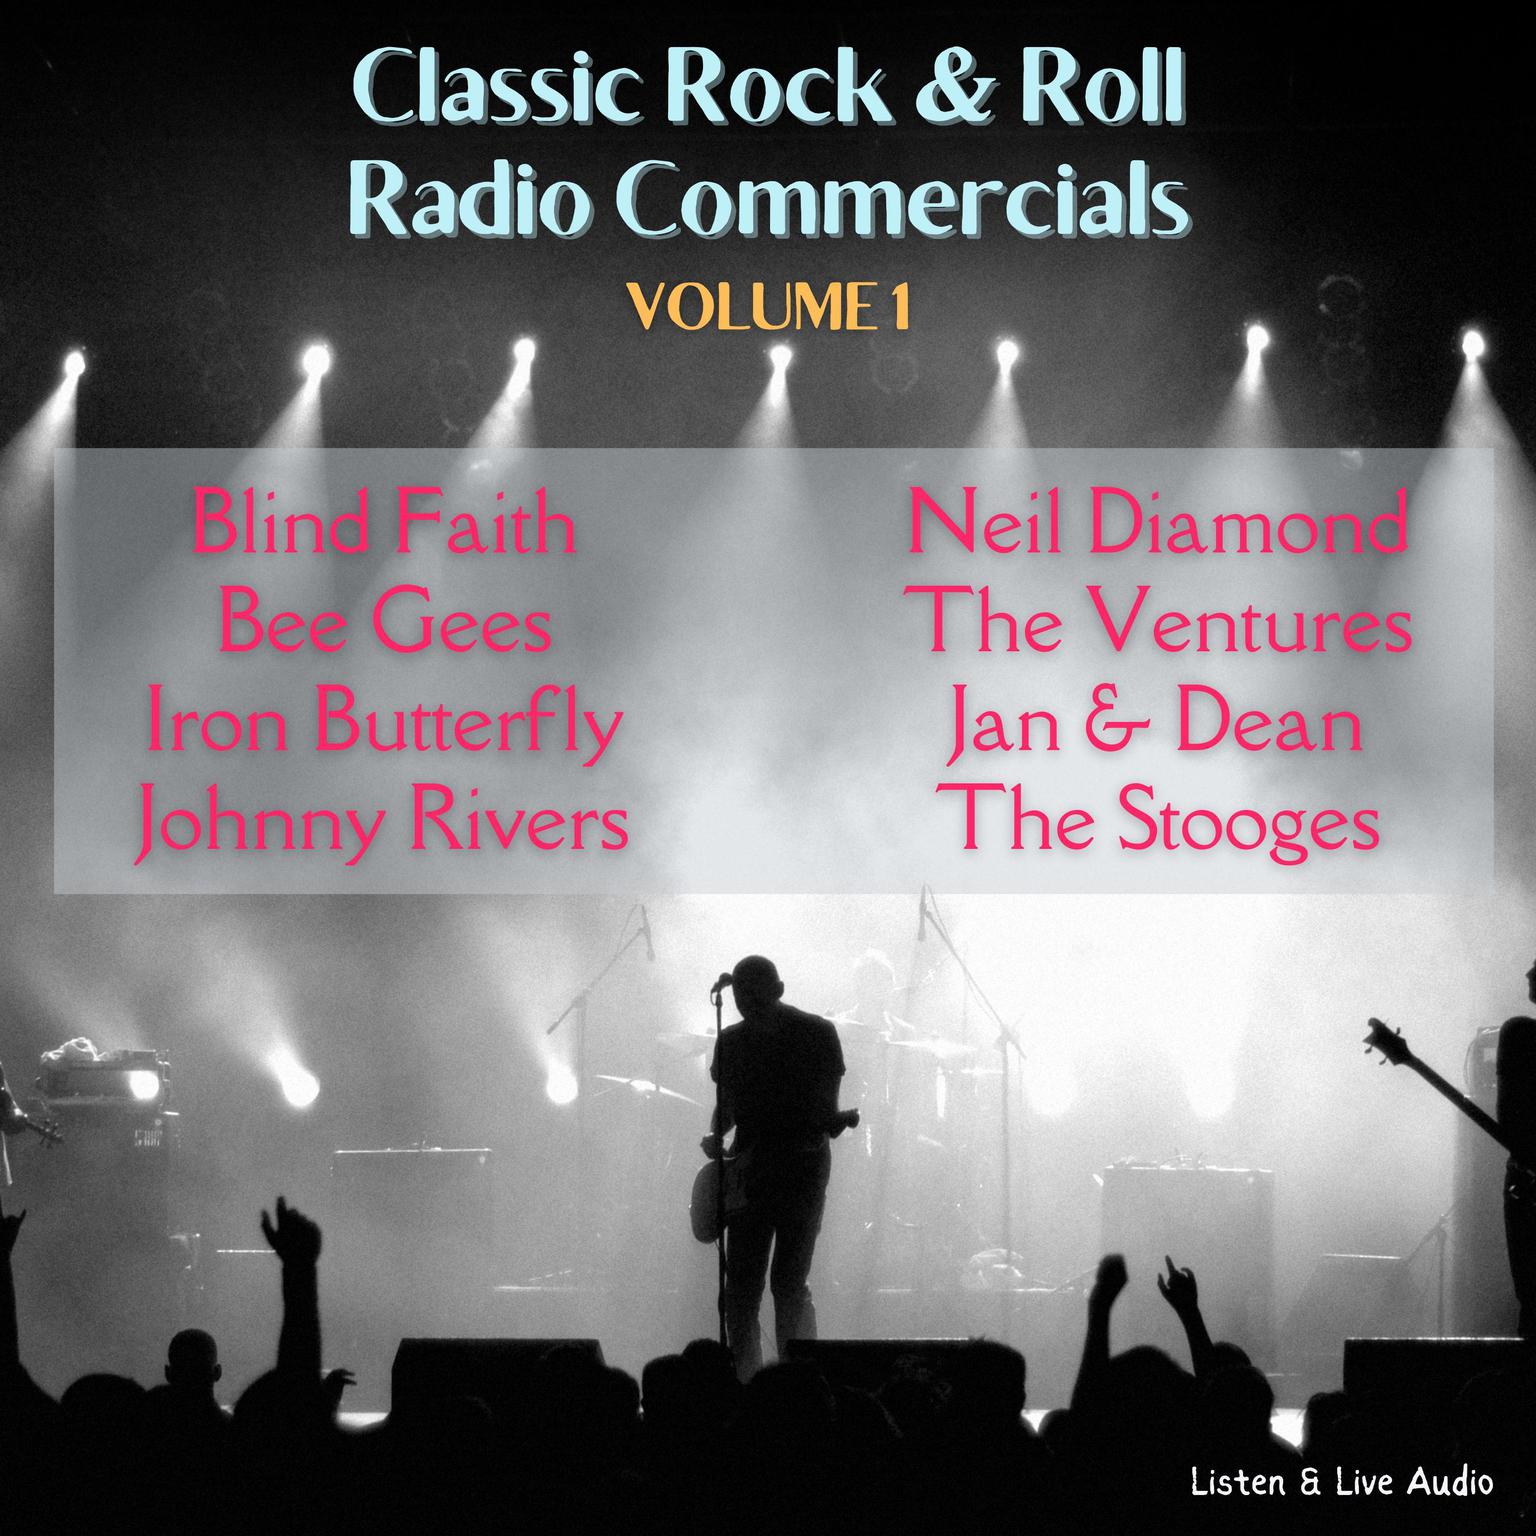 Classic Rock & Rock Radio Commercials - Volume 1 Audiobook, by Bee Gees